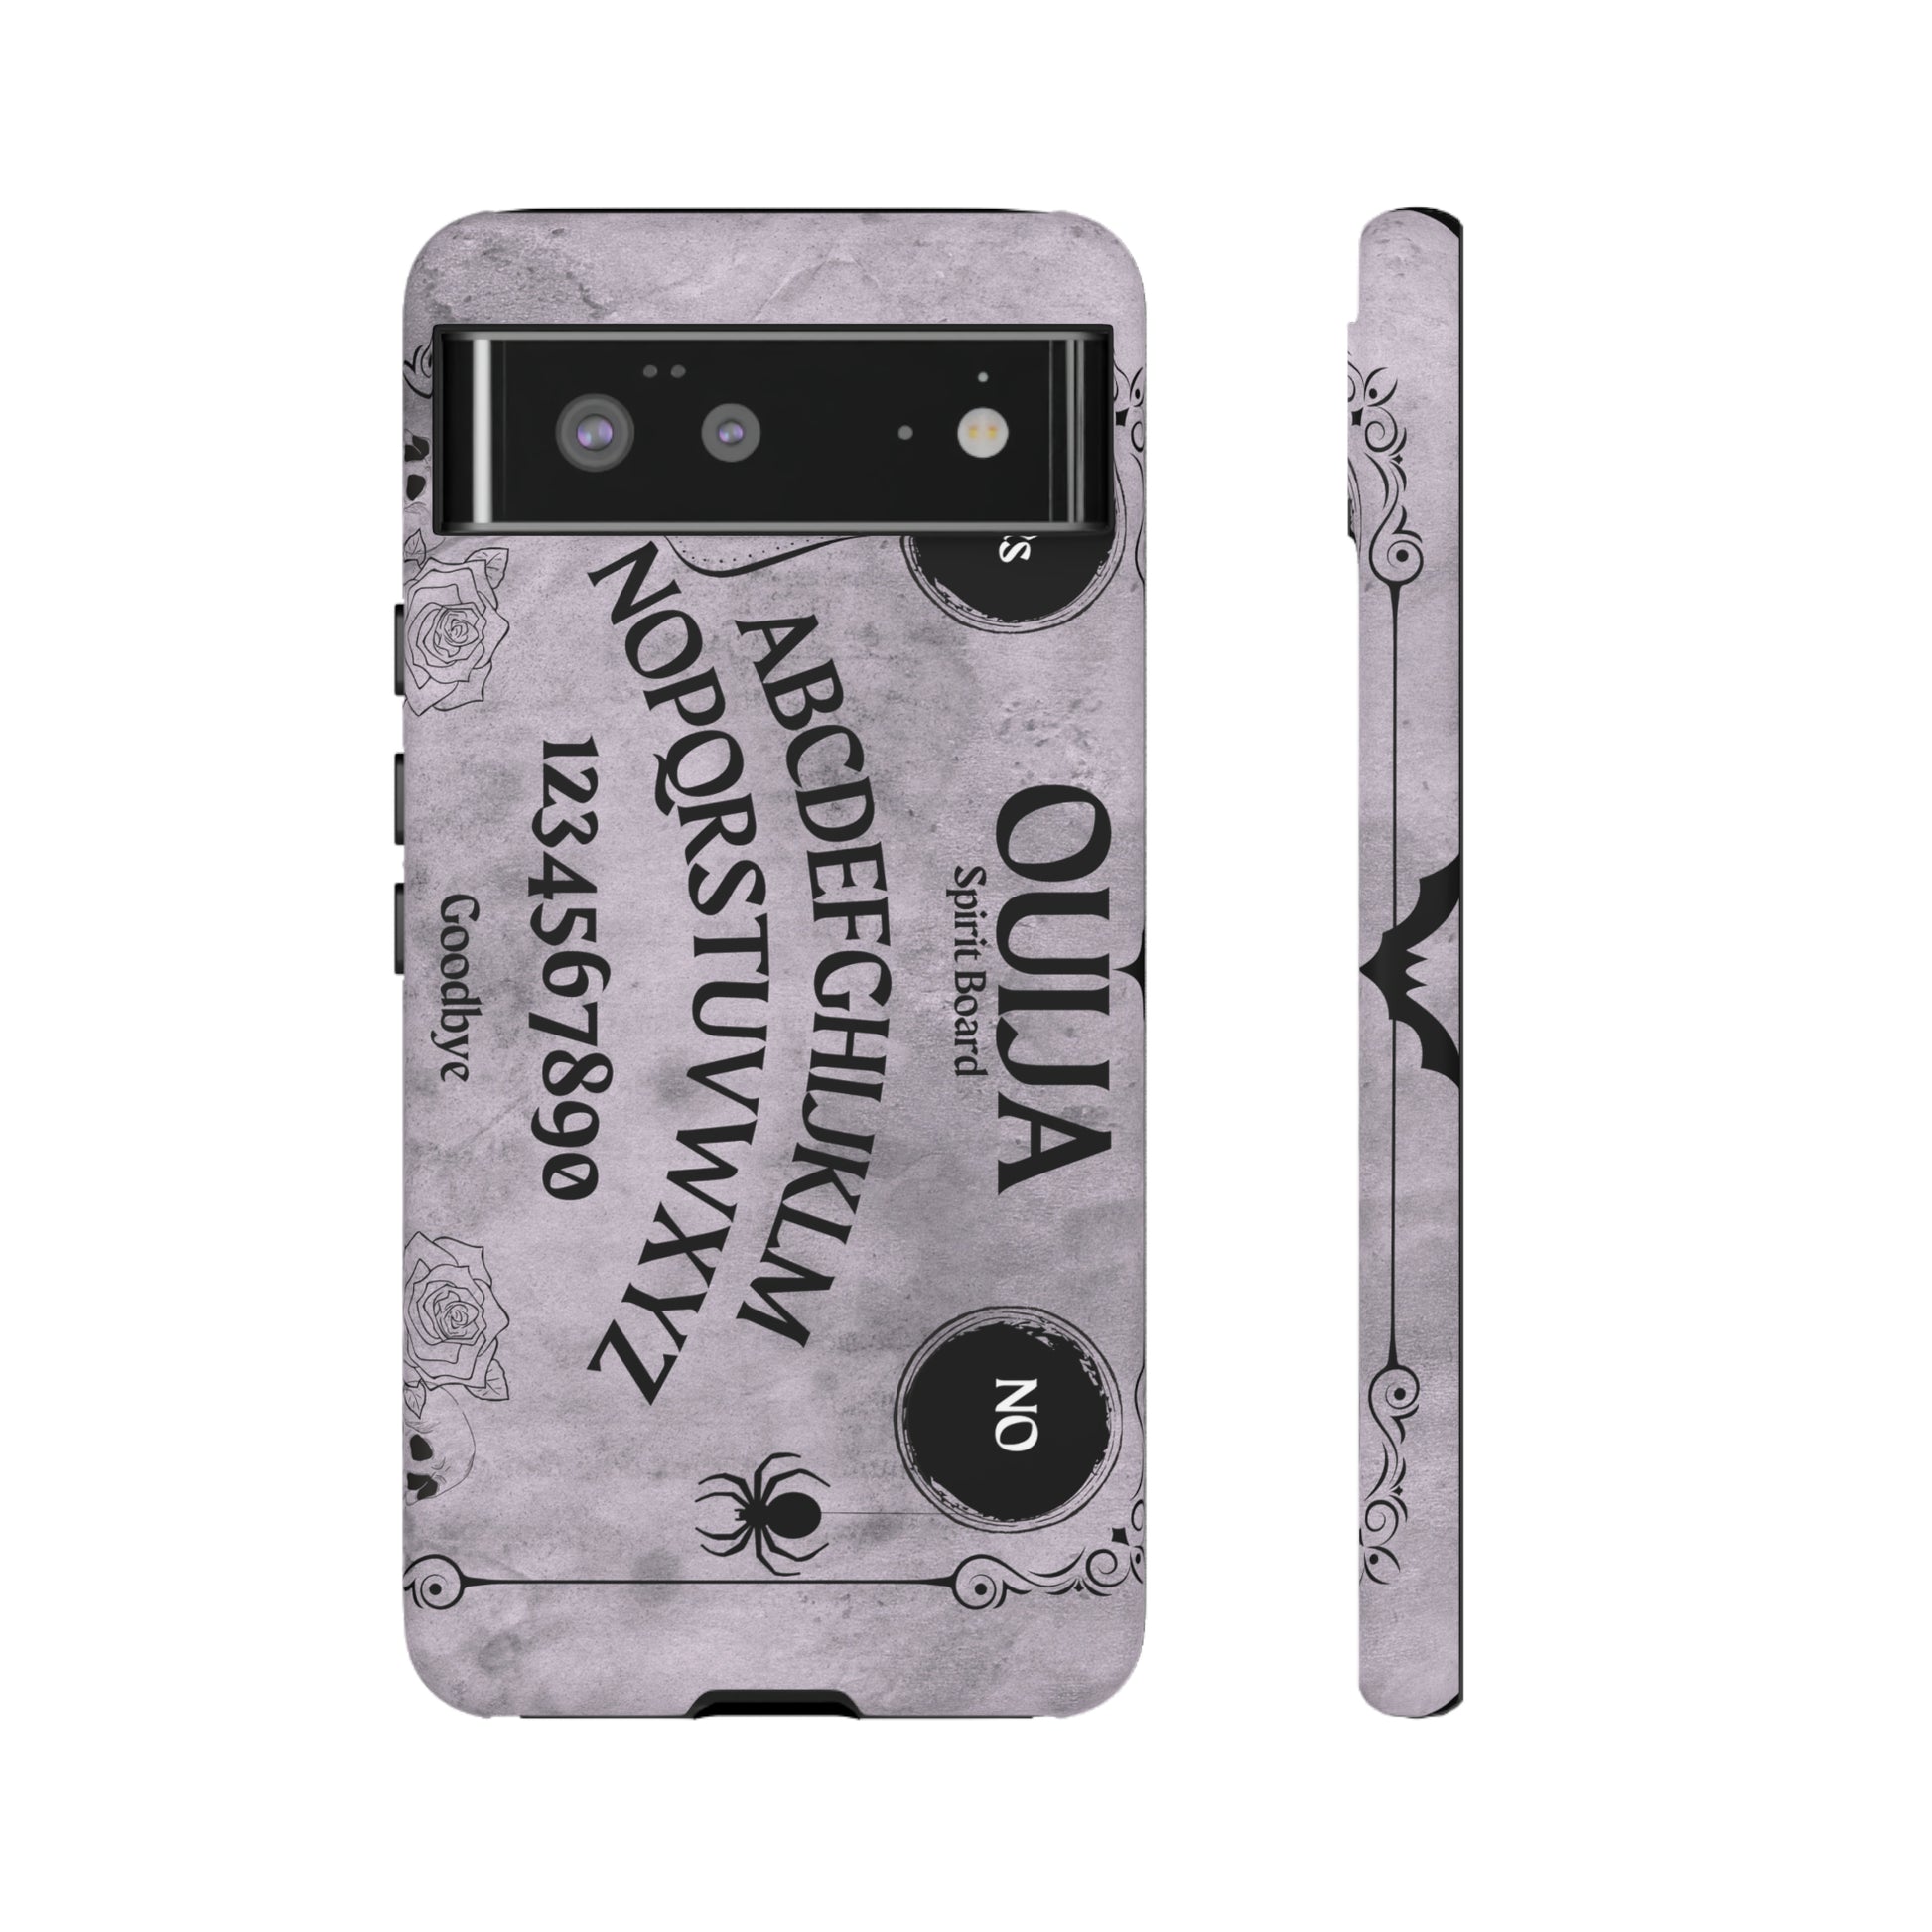 Ouija Board Tough Phone Cases For Samsung iPhone GooglePhone CaseVTZdesignsGoogle Pixel 6MatteAccessoriesGlossyhalloween